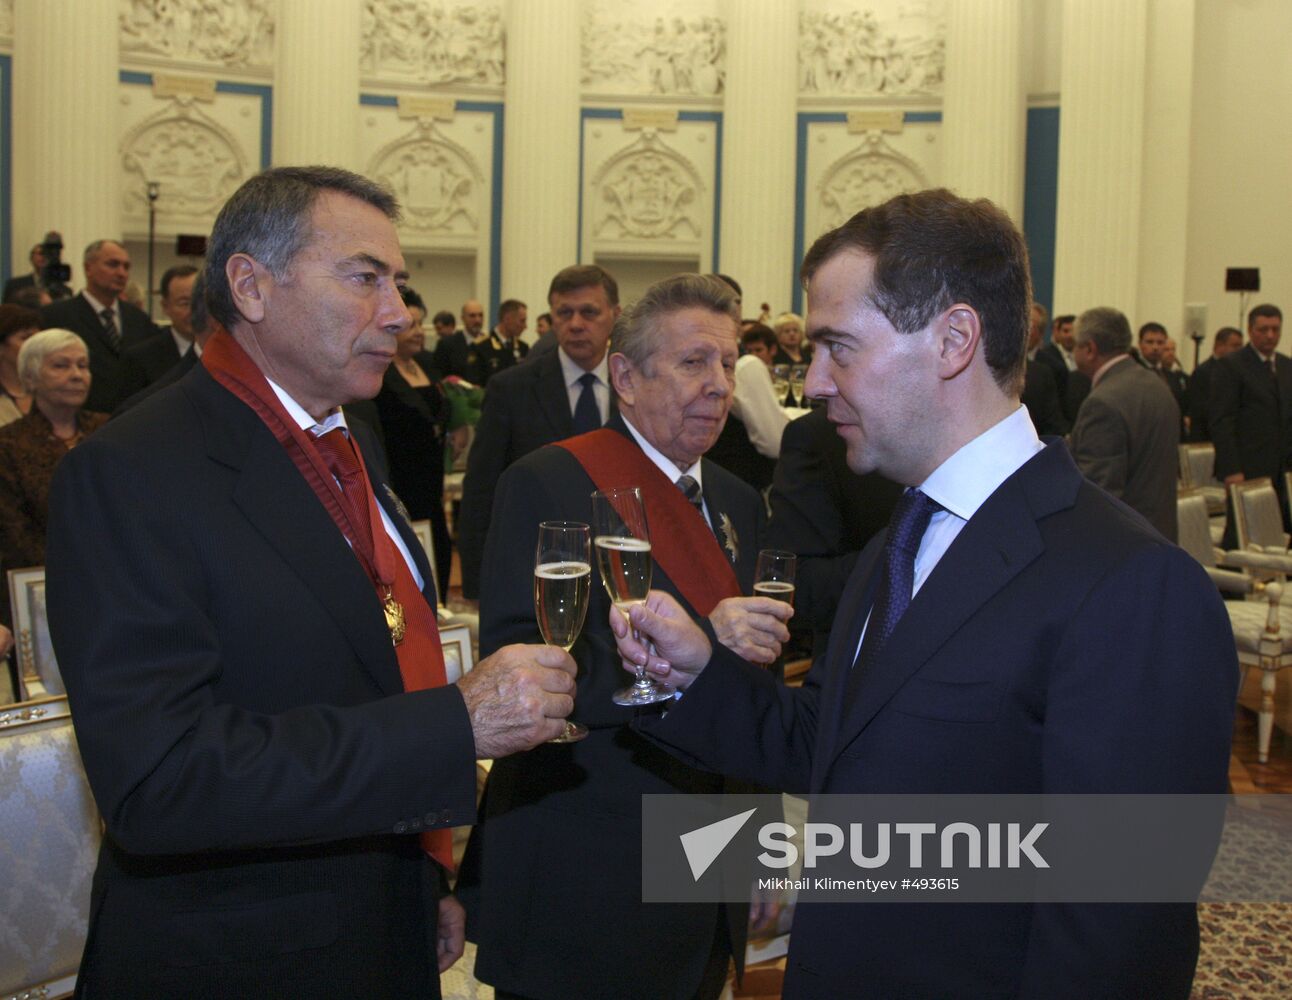 Dmitry Medvedev presents state awards